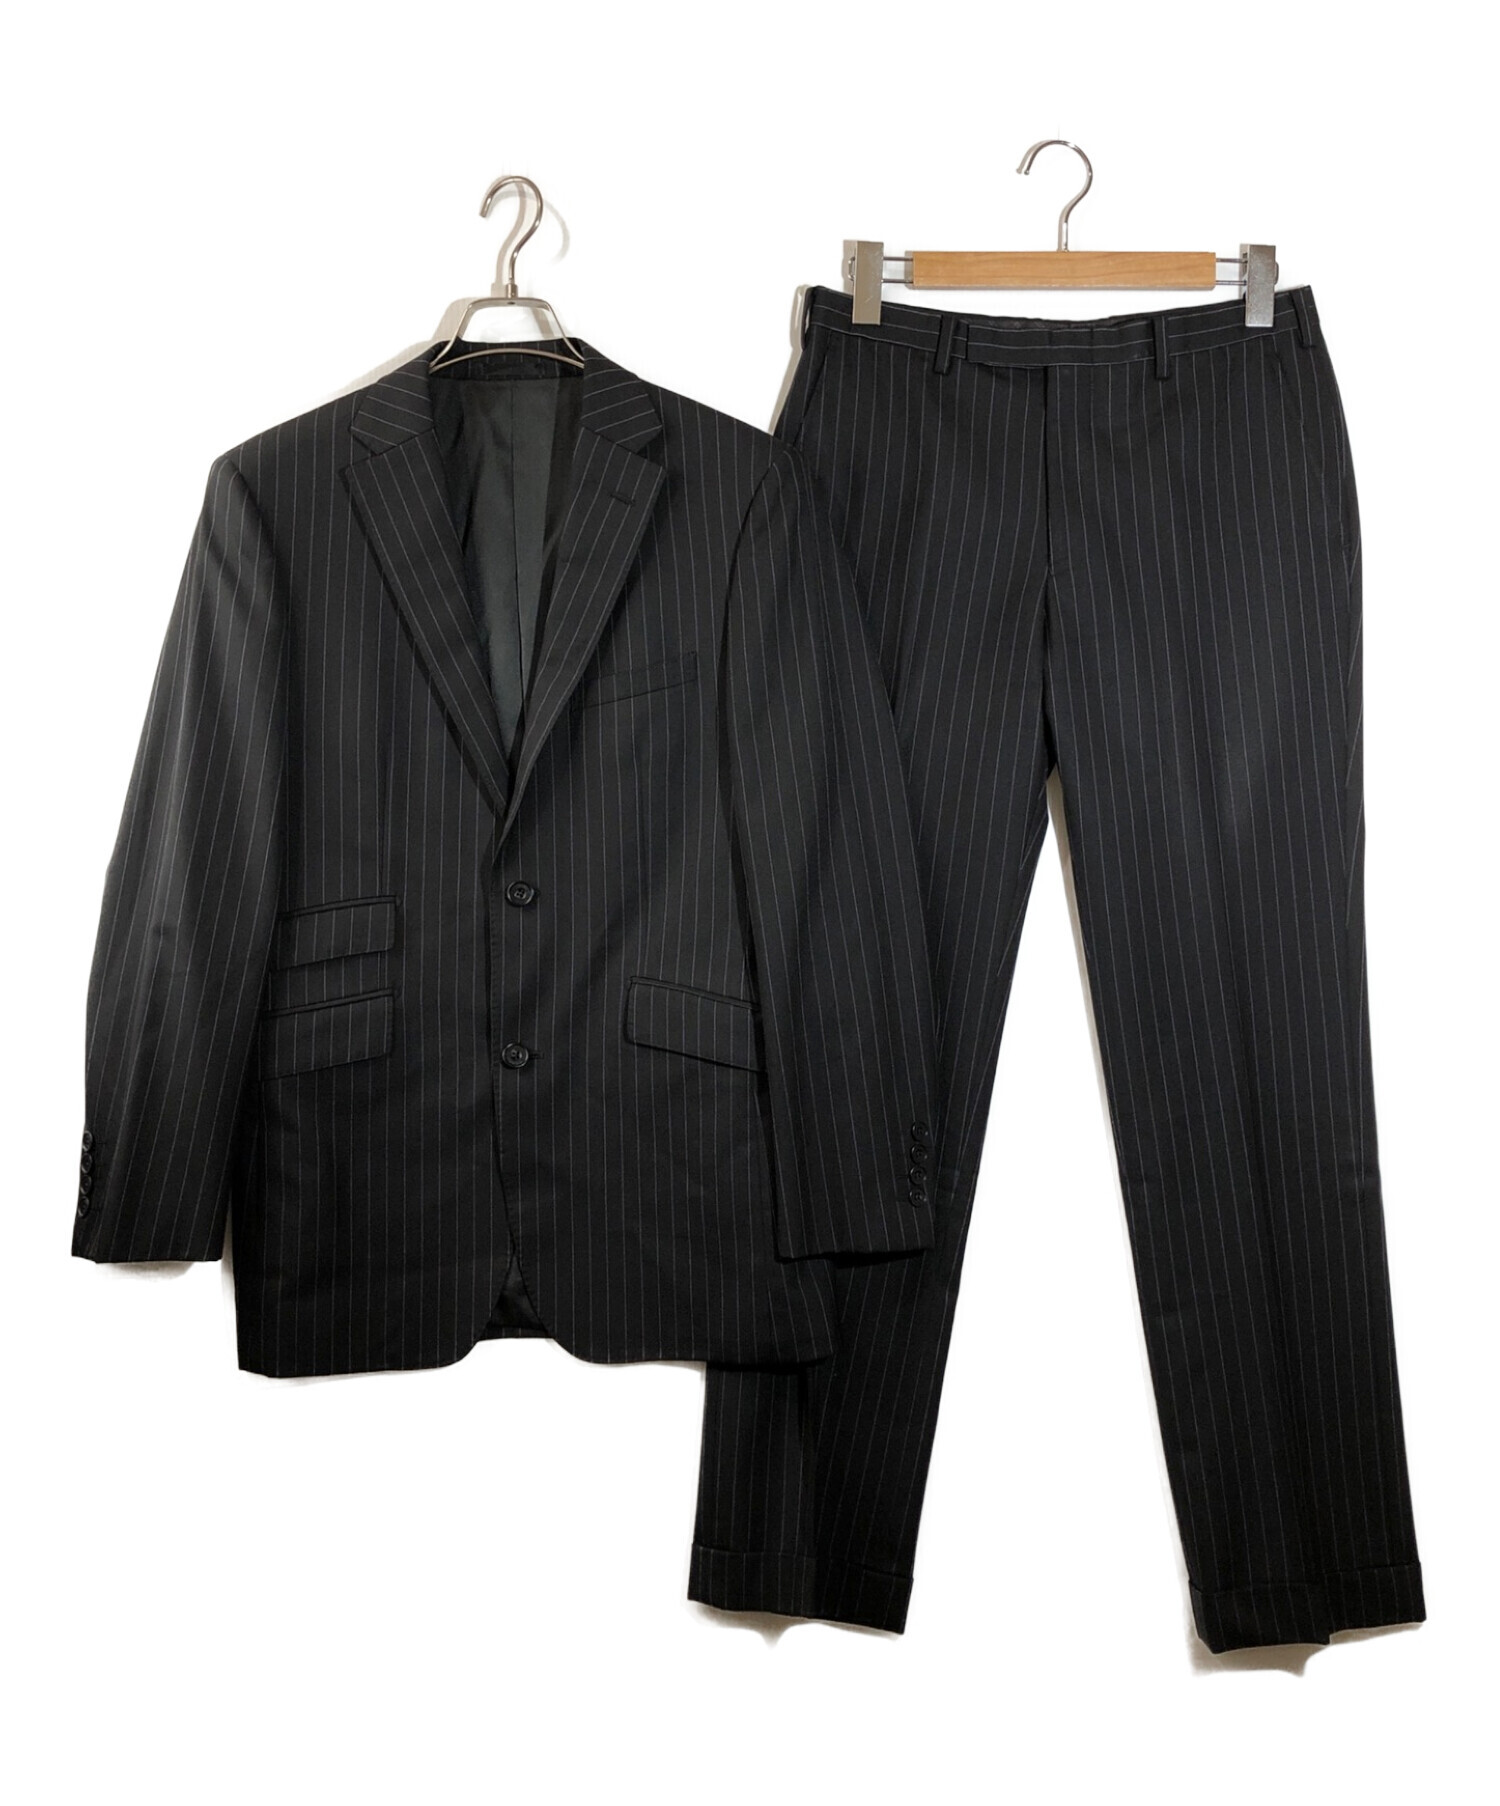 burberry black label メンズスーツ セットアップ - セットアップ